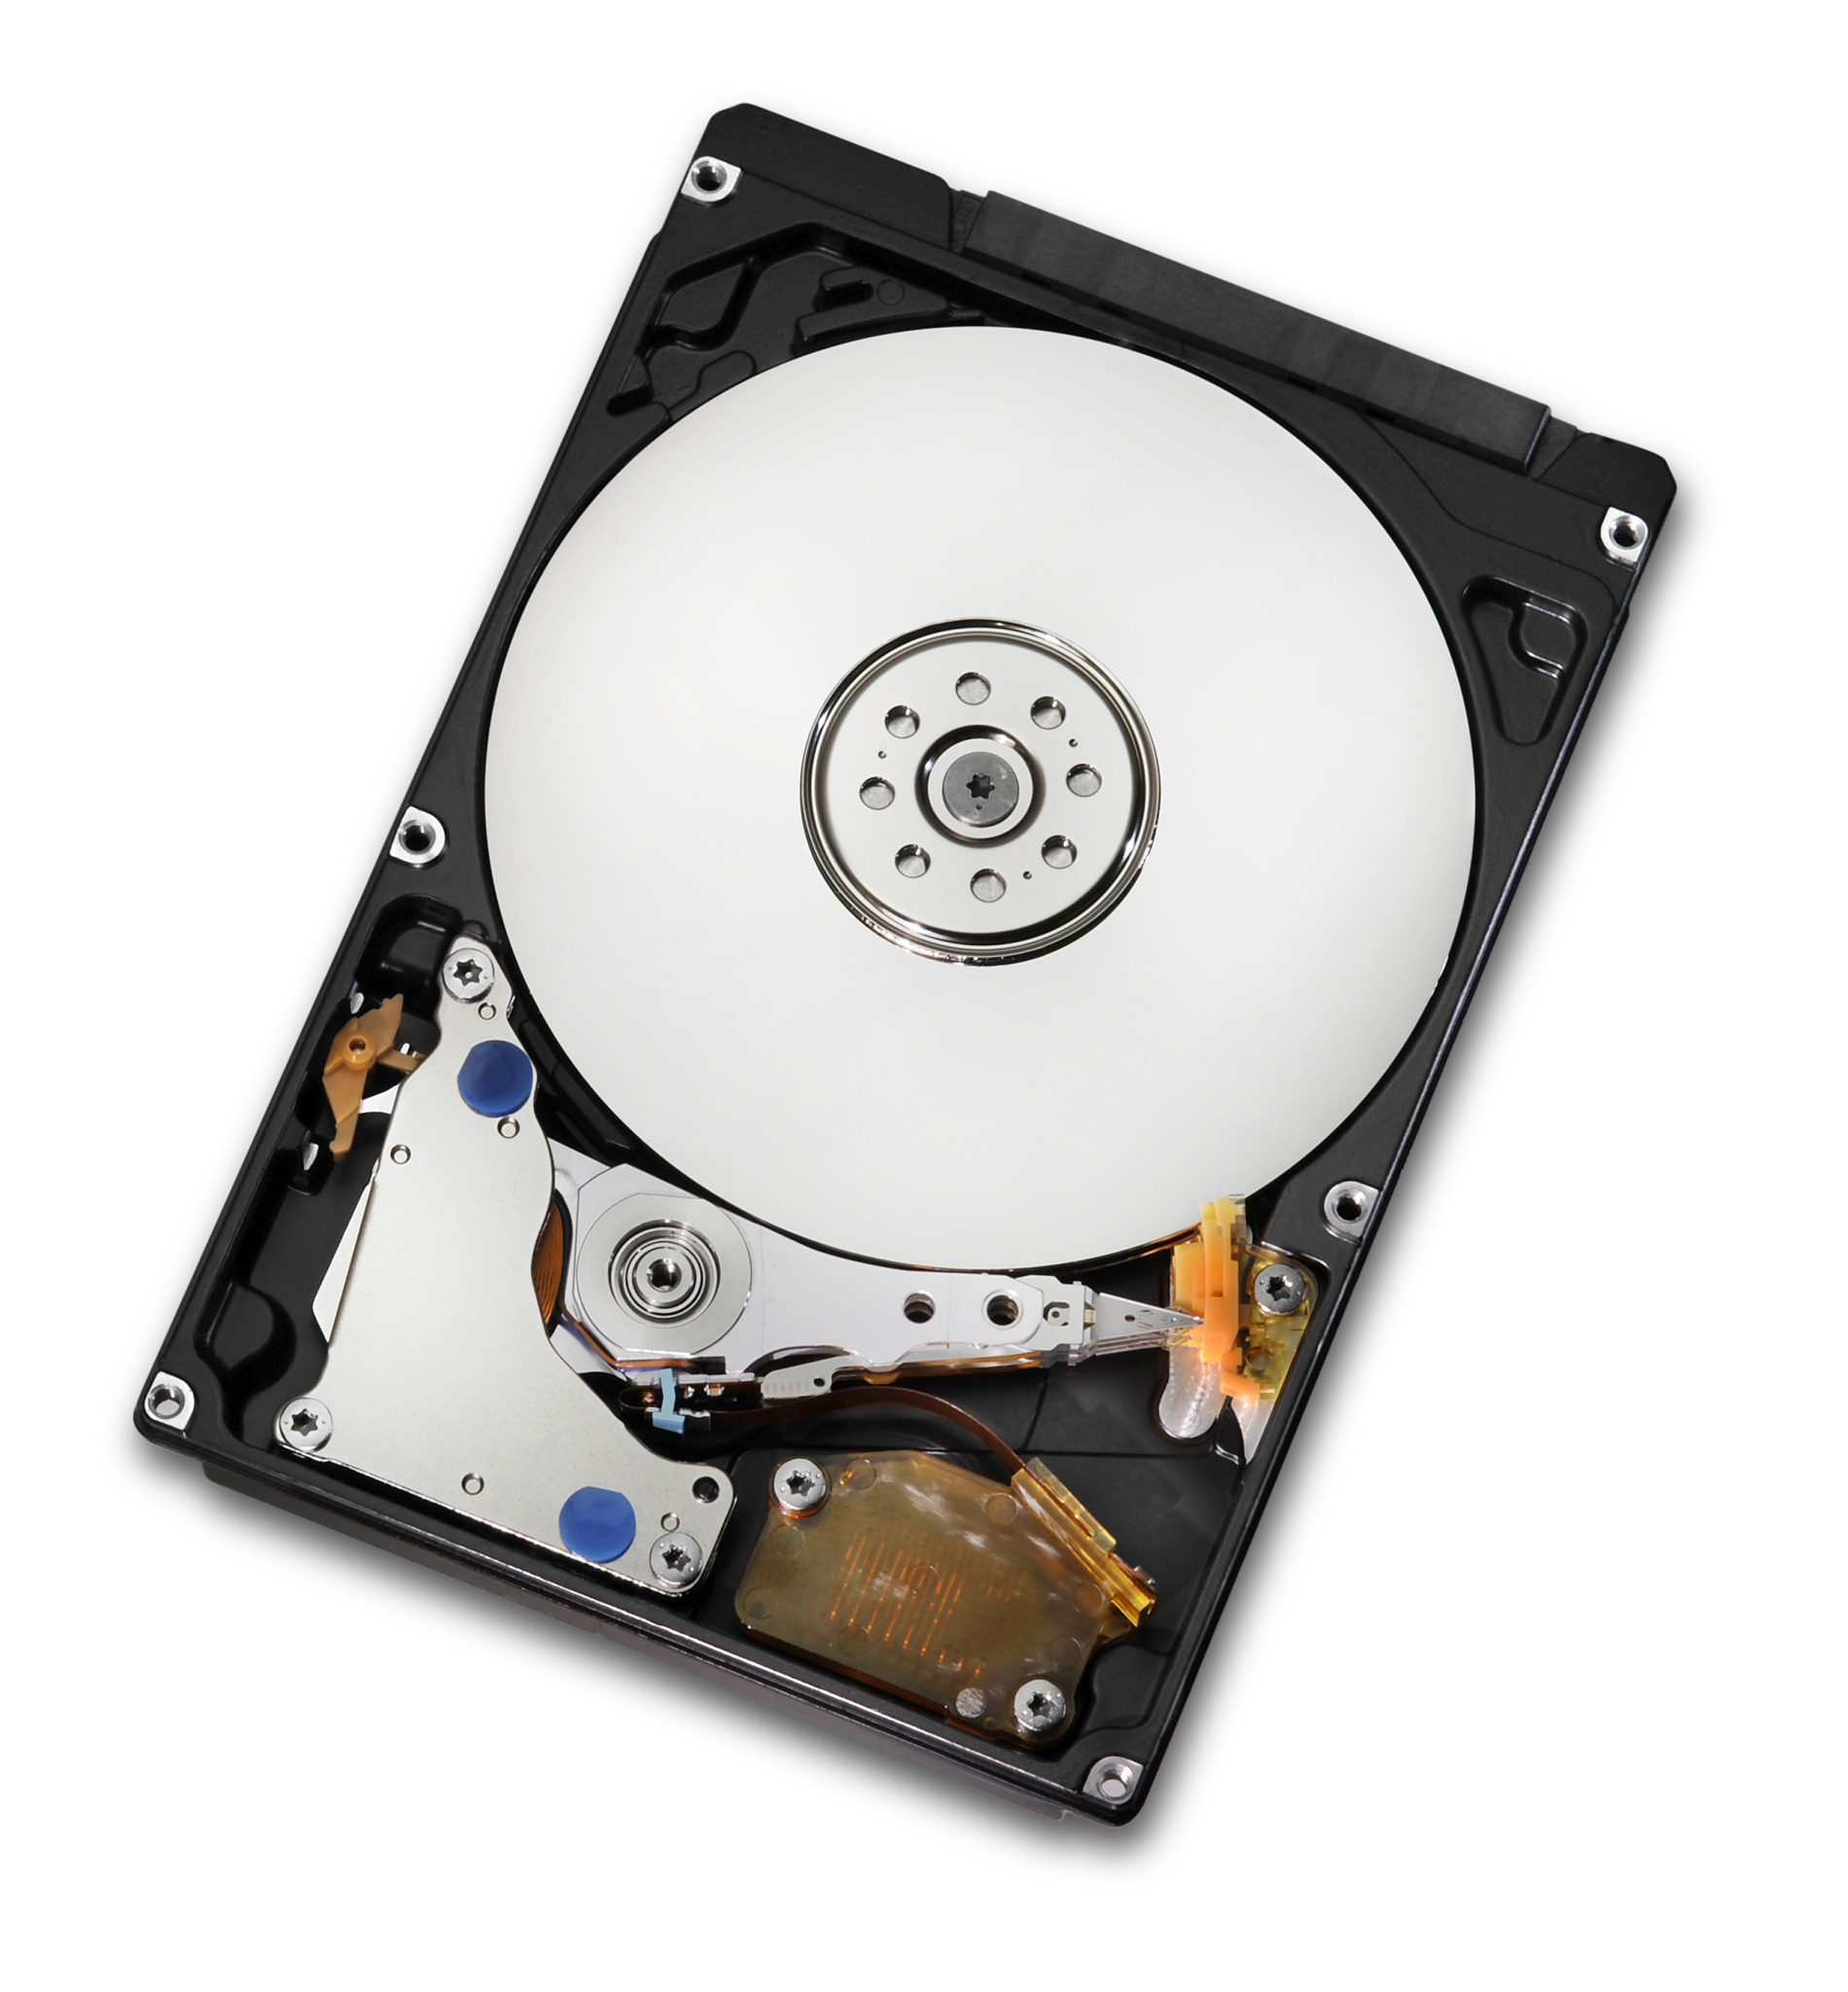 Installing A Larger Hard Disk Drive